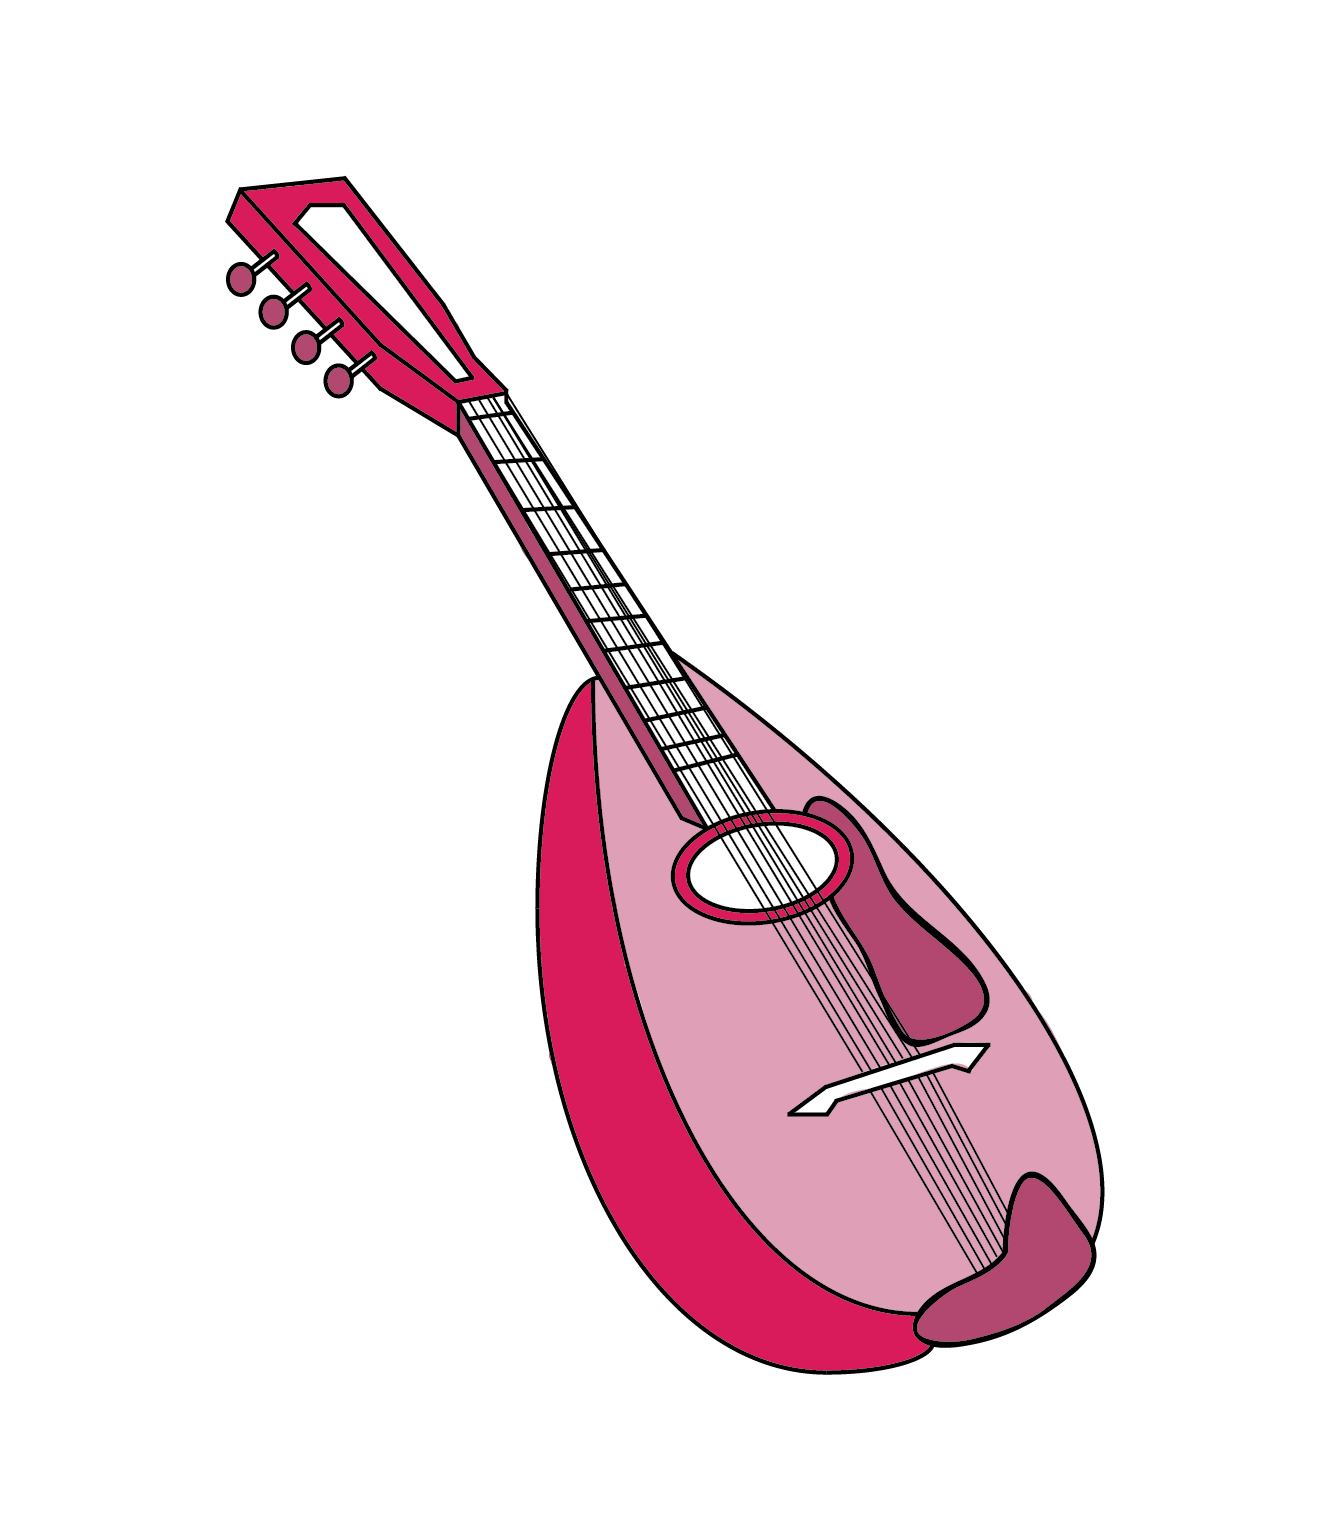 instruments clipart mandolin